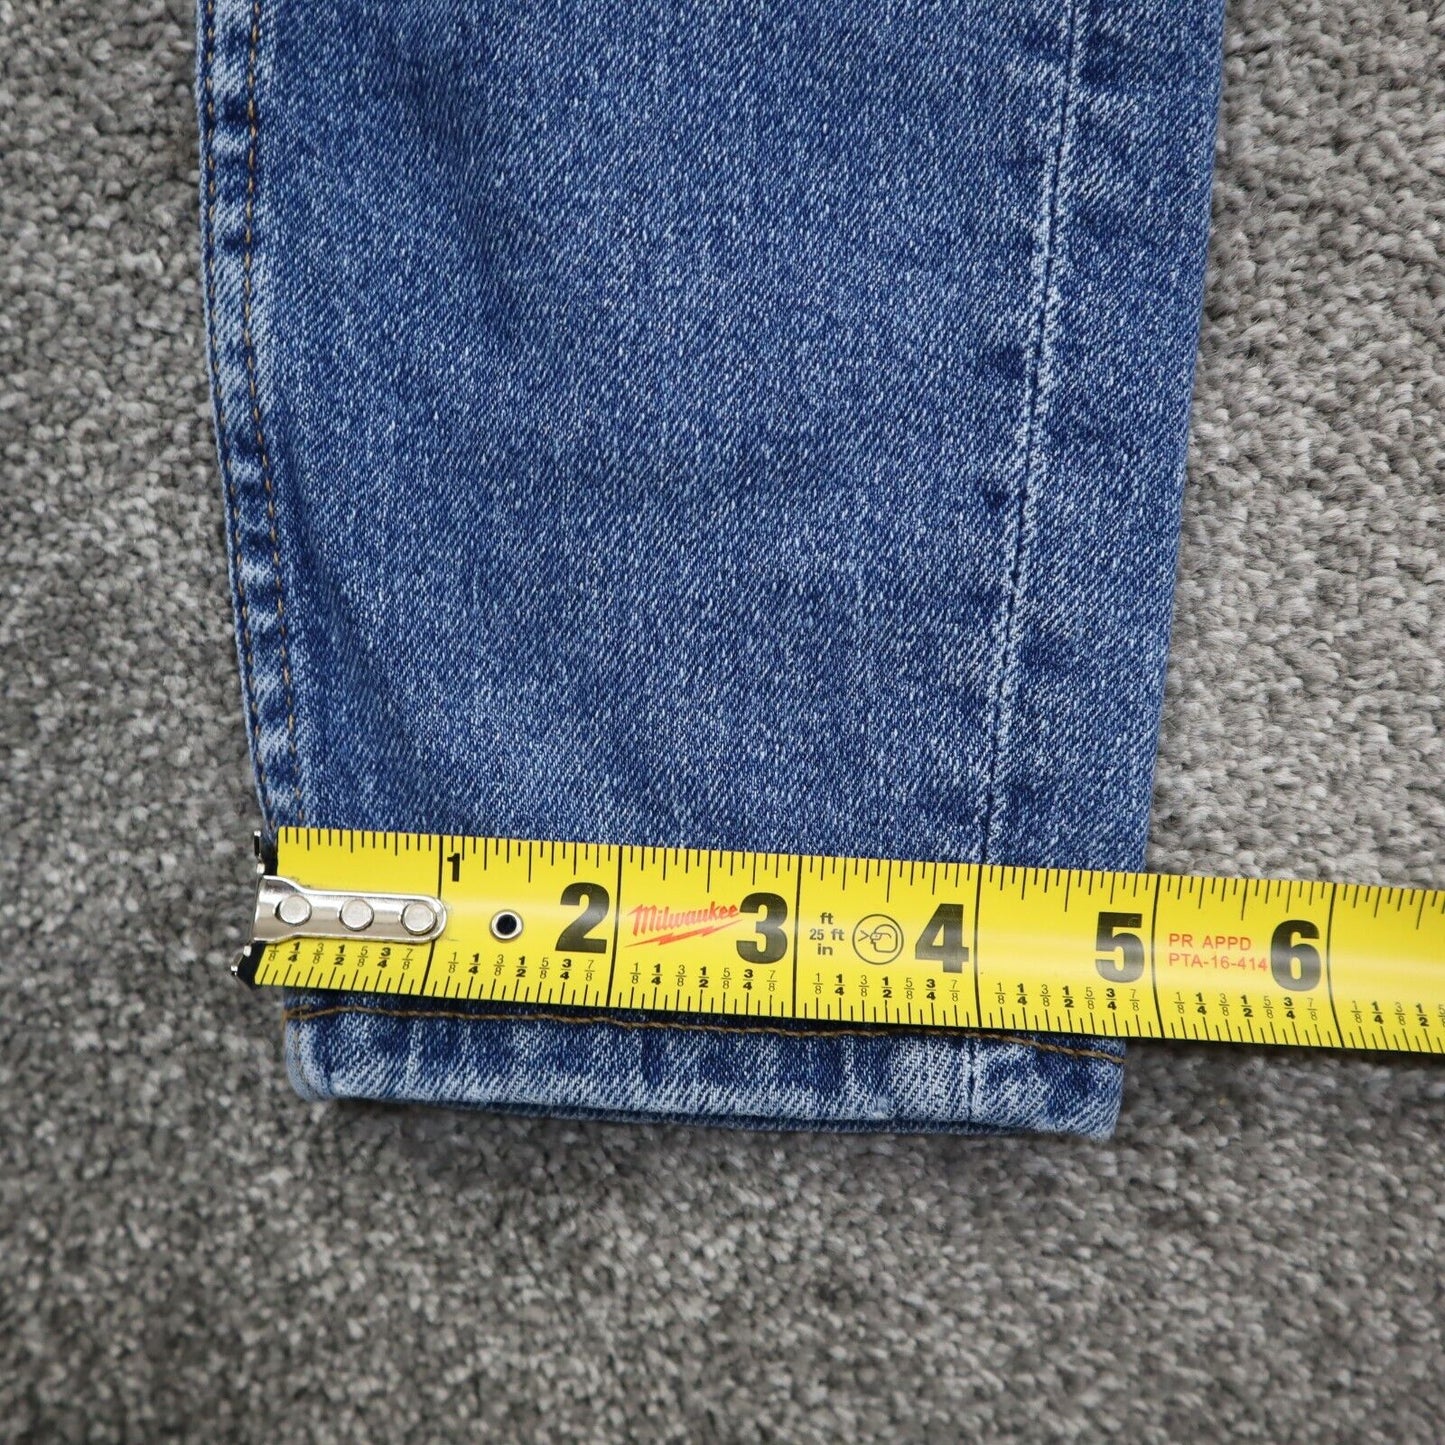 H&M Womens Jegging Jeans Denim Stretch High Rise Five Pockets Blue Size US 10